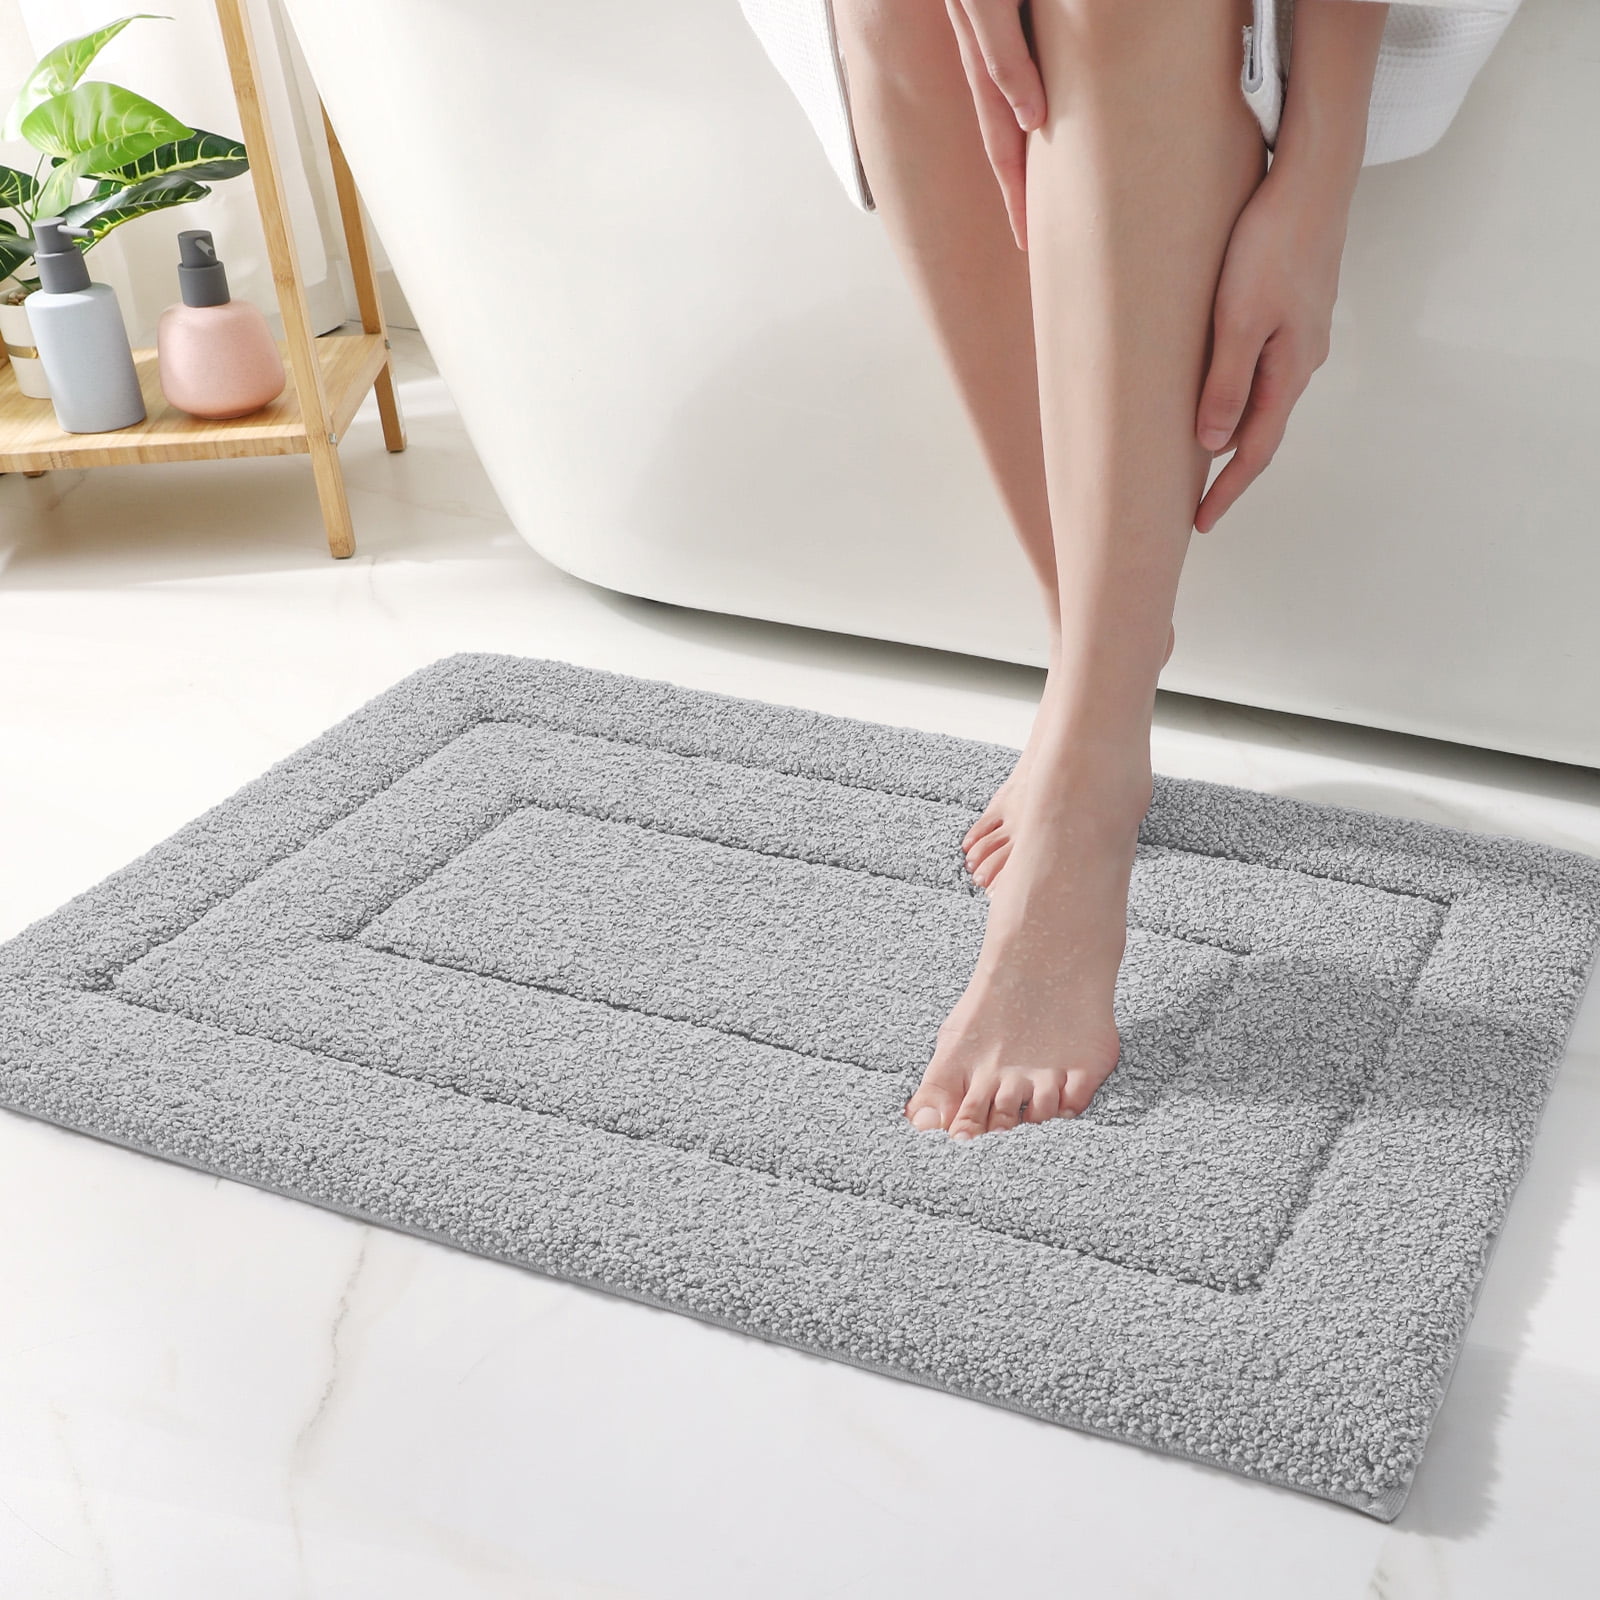 DEXI Bath Mat Bathroom Rug Absorbent Non-Slip Washable Shower Floor Mats  Small Carpet 16x24,Dark Gray Light Grey and White